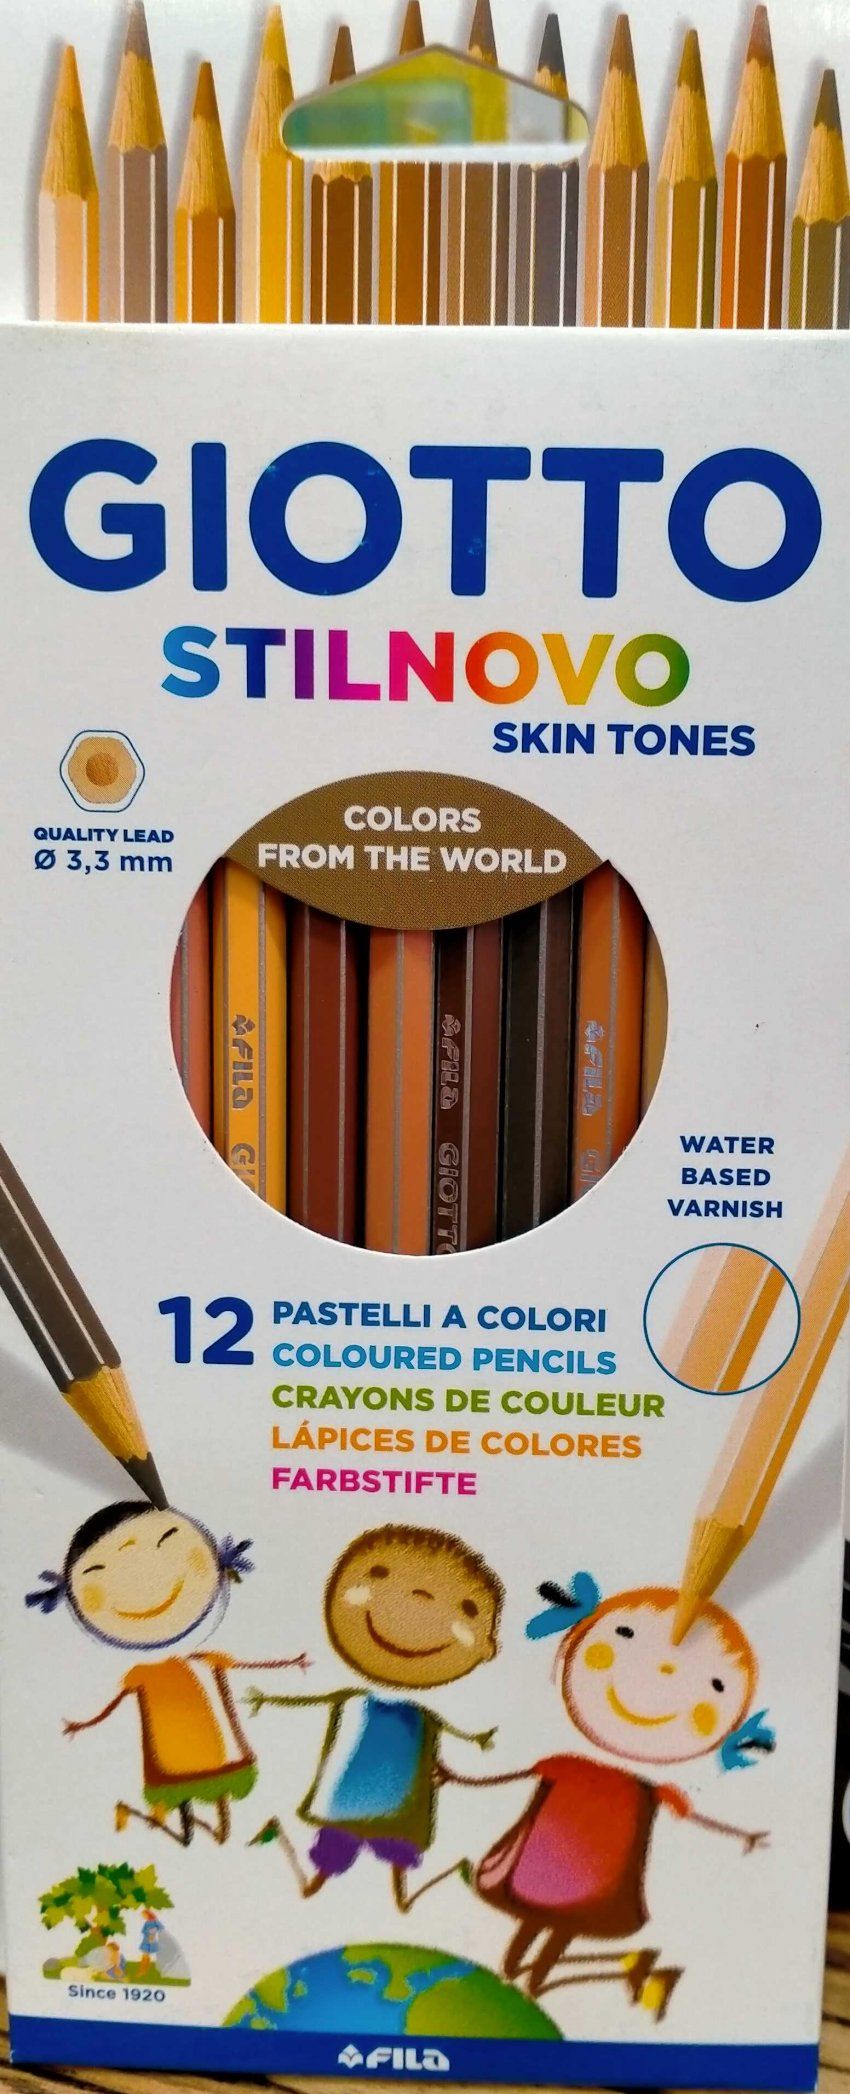 Giotto Silnovo Skin tones